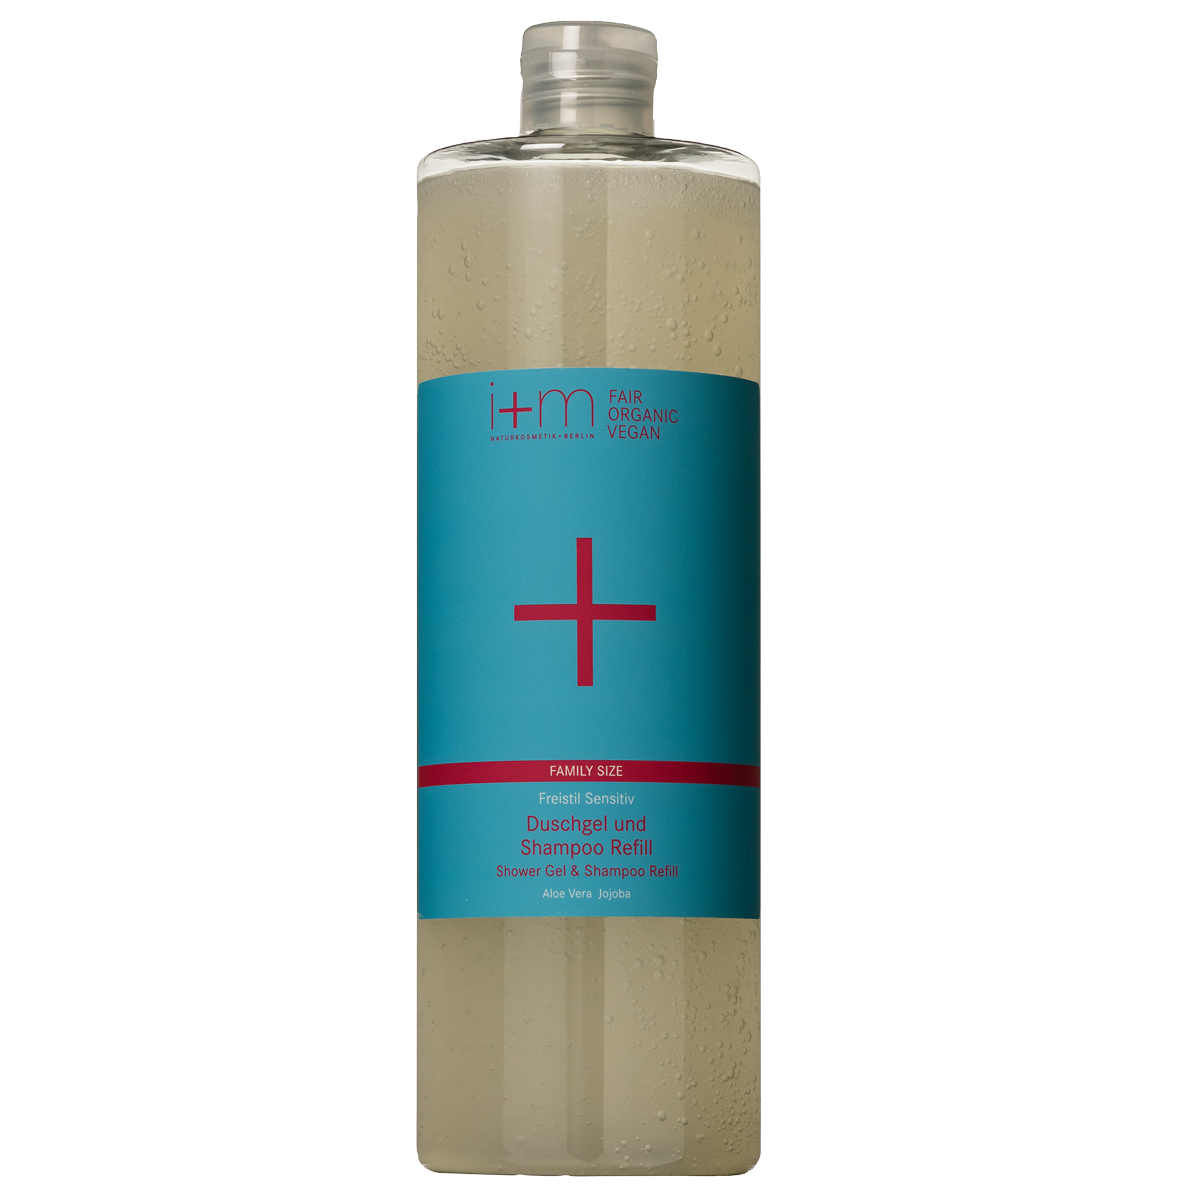 Freistil Sprchový gel a šampon pro citlivou pleť 1l i+m Naturkosmetik